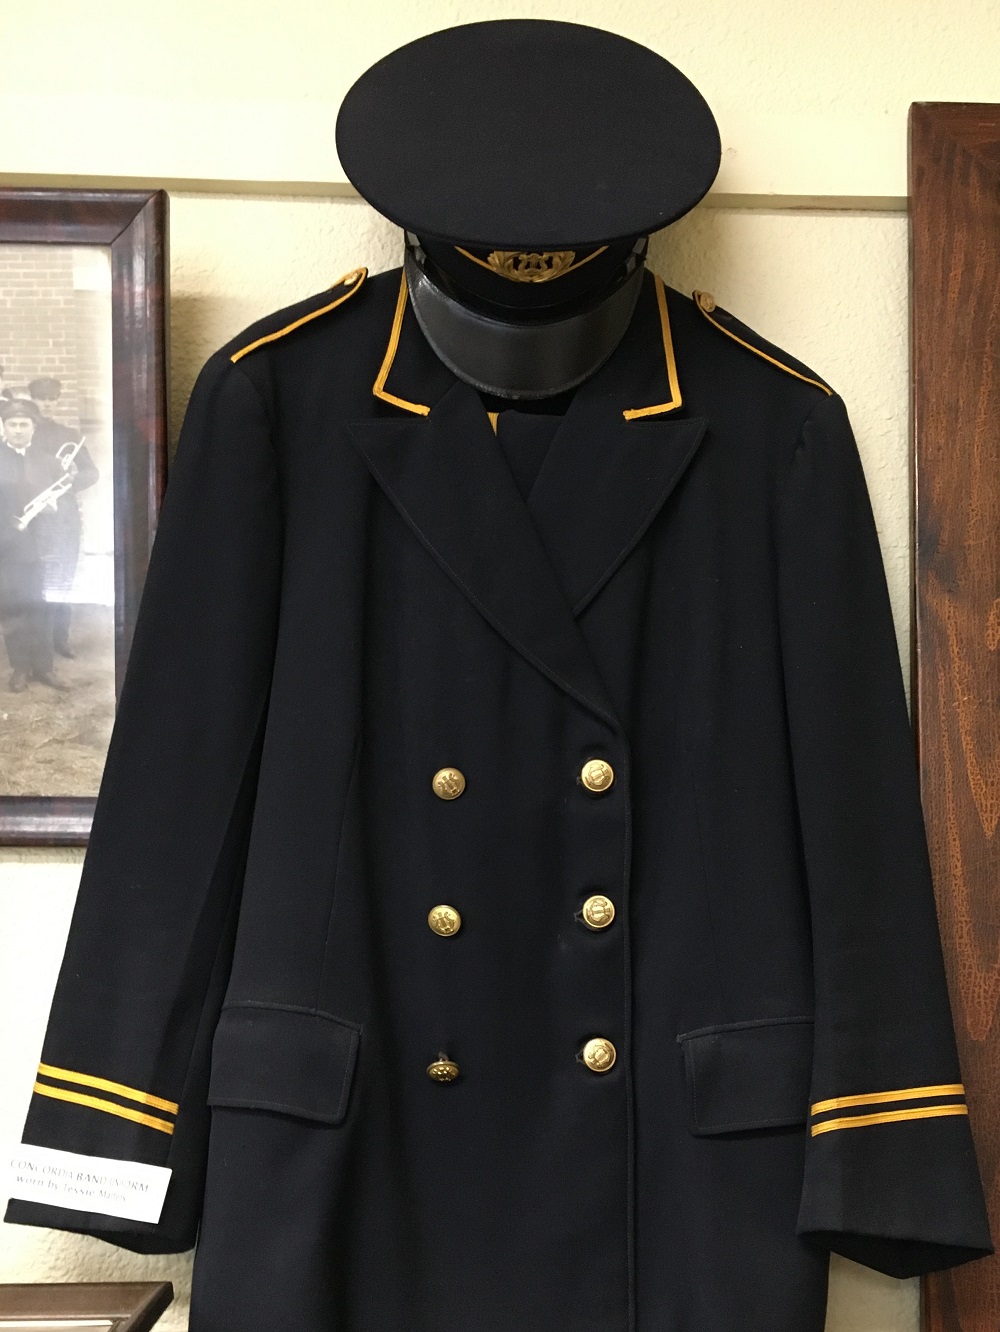 Tessie Marten’s Concordia Municipal Band uniform